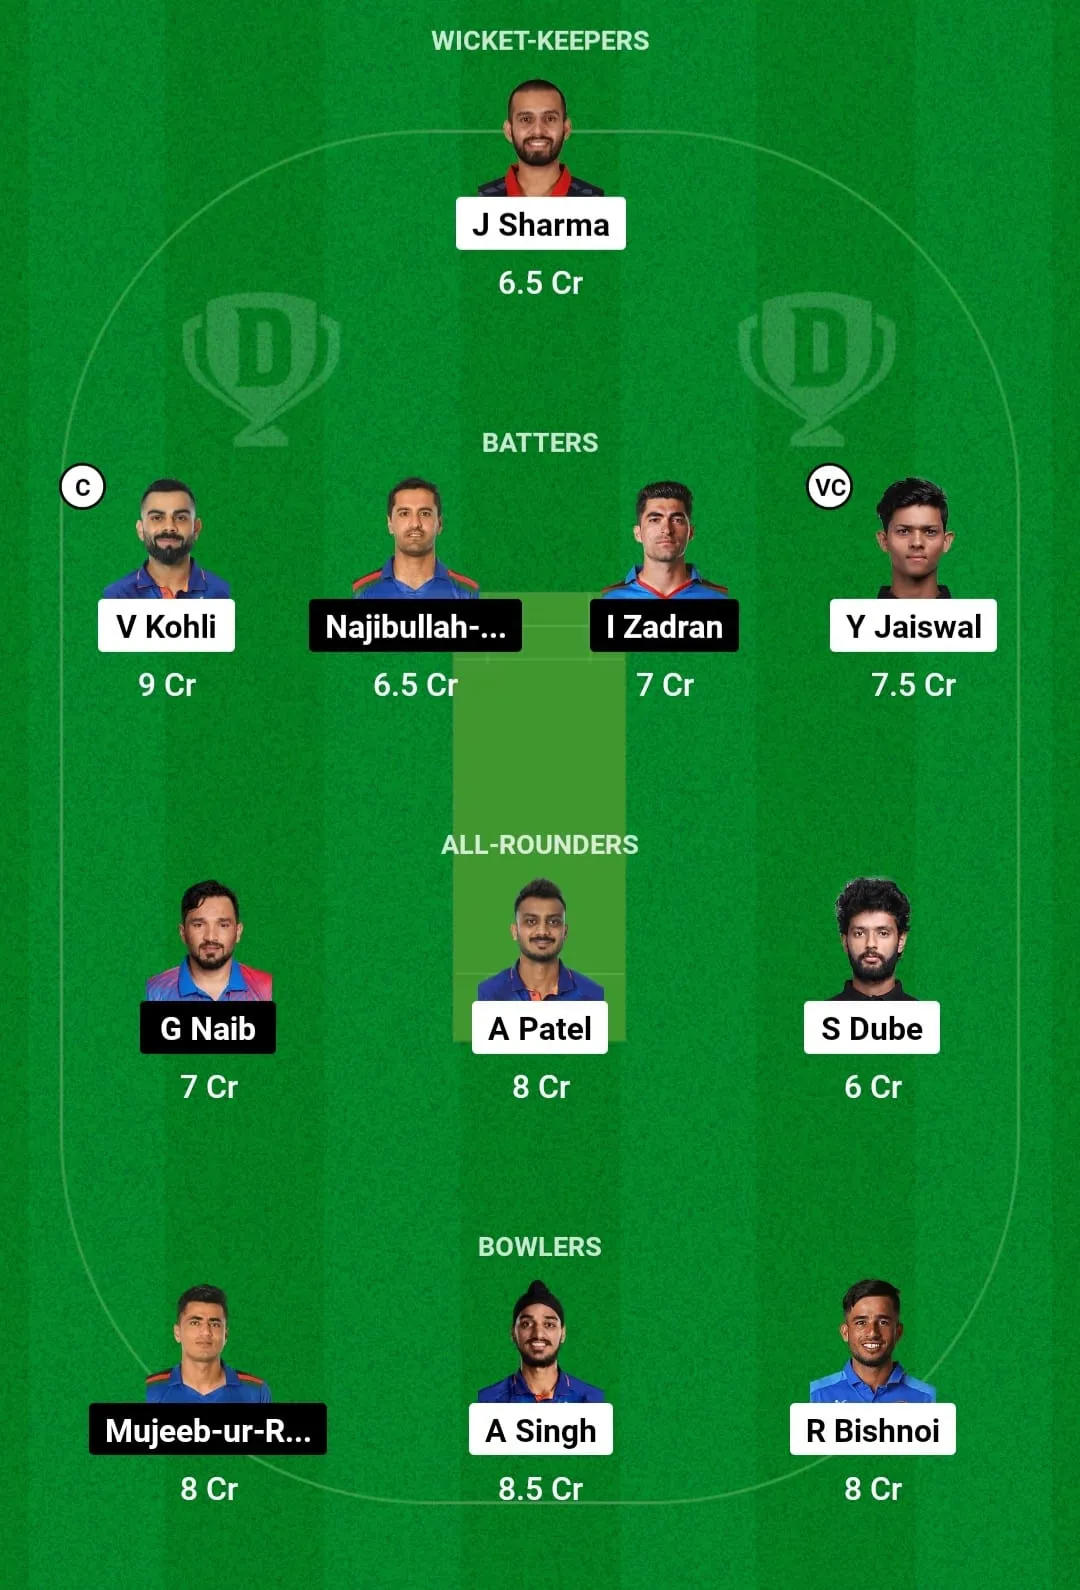 India vs Afghanistan Dream11 Prediction